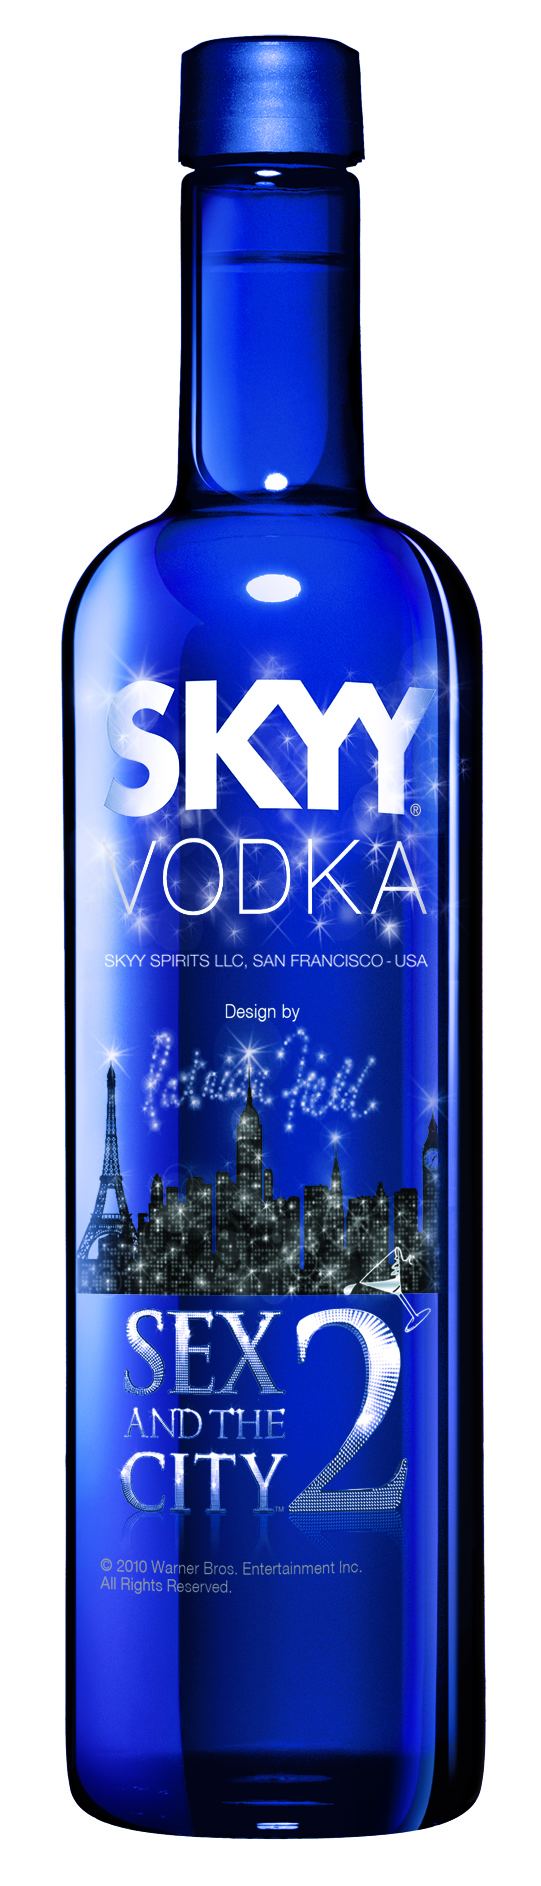 SKYY vodka Skyy Vodka Campari Corporate